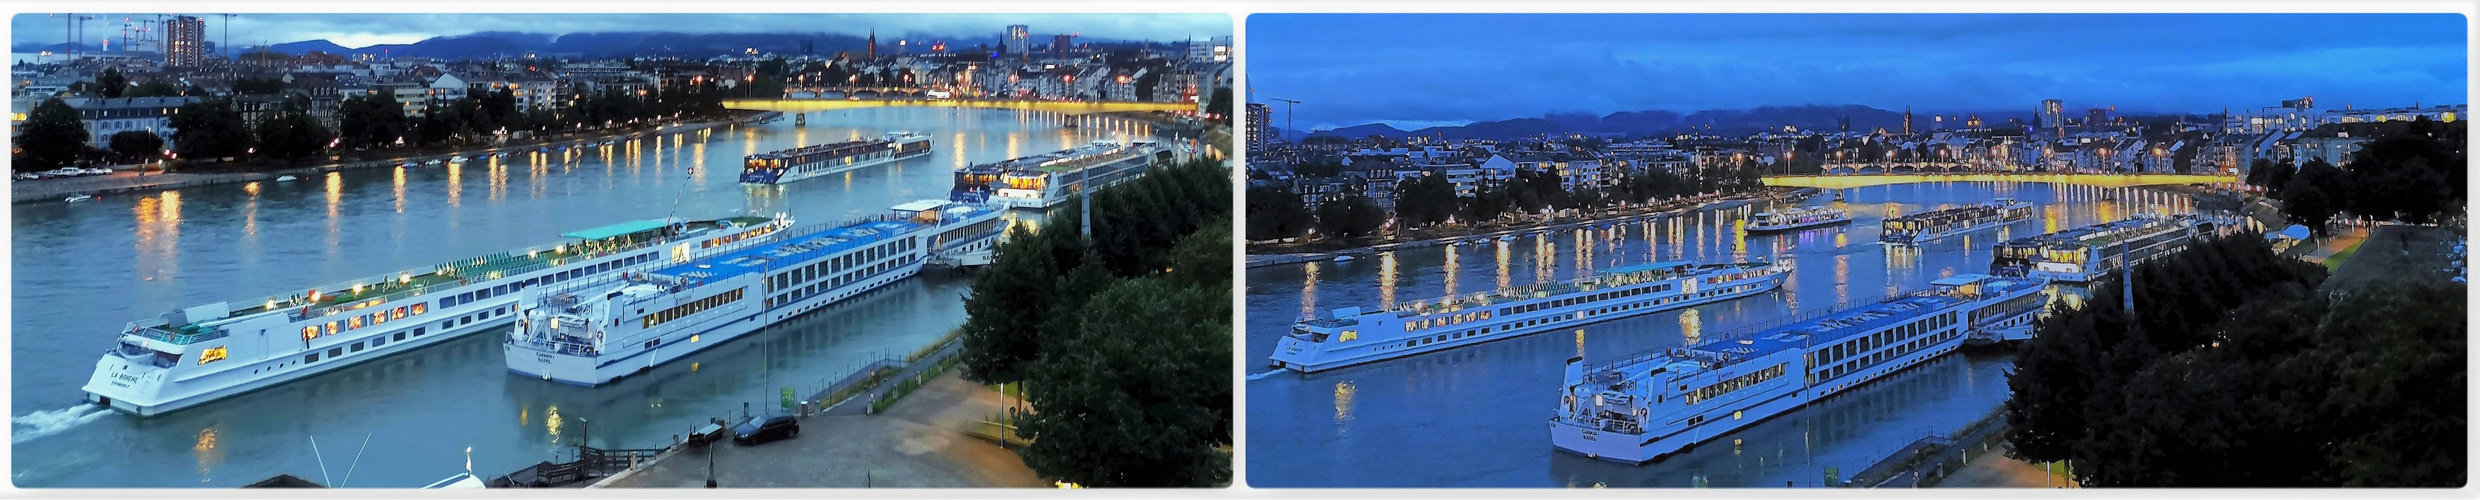 St. Johanns-Hafen Basel - blaue Stunde